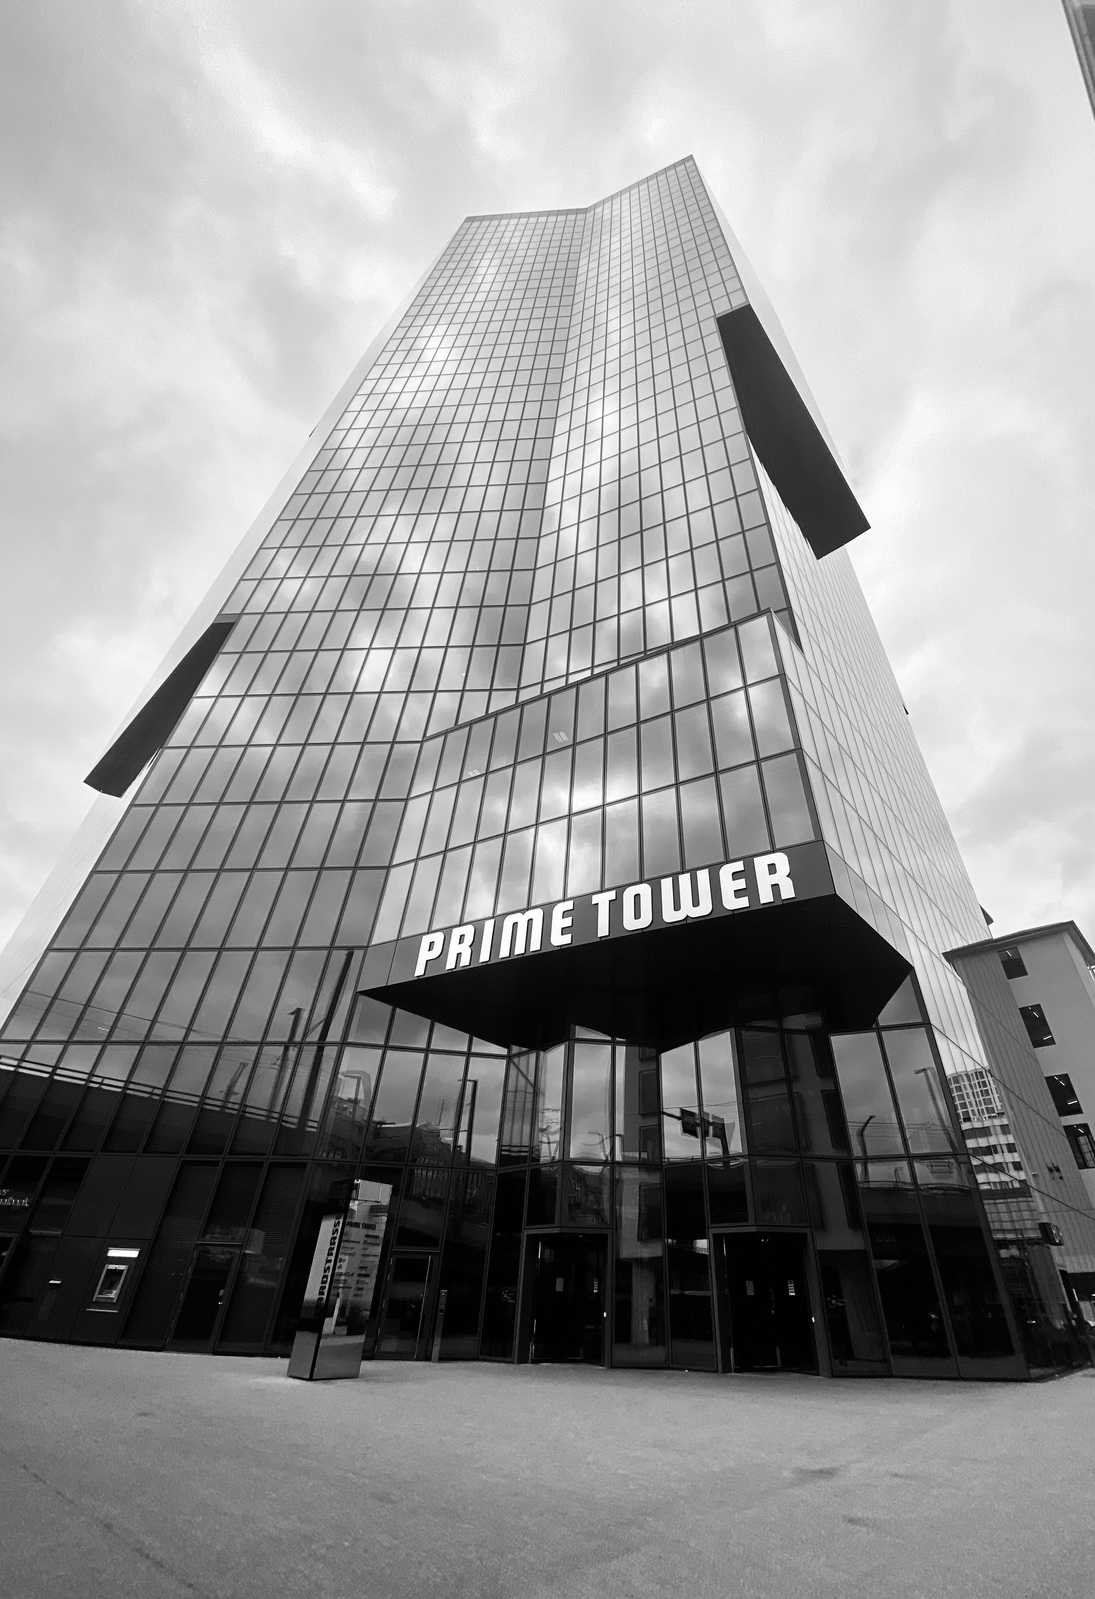 Image of Zurich Prime Tower by Team PhotoHound